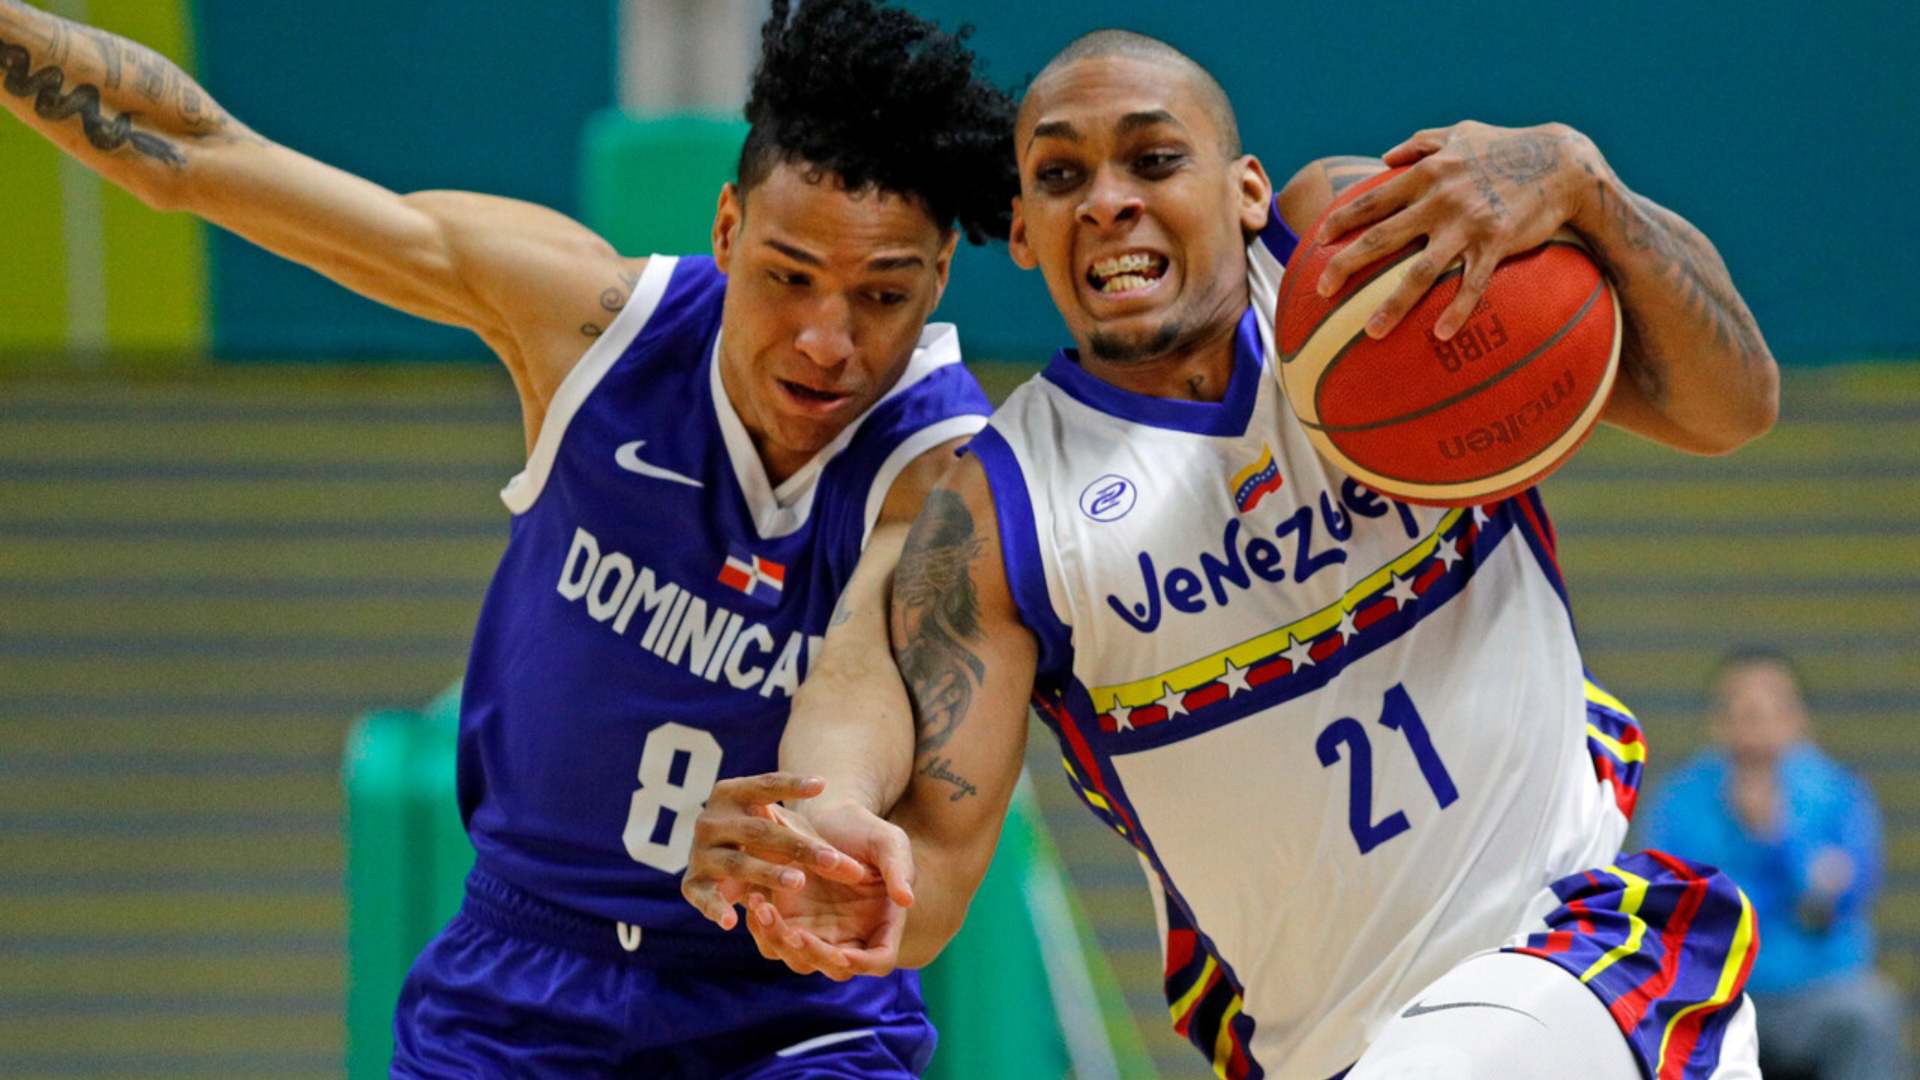 Male’s basketball: Venezuela defeats the Dominican Republic in overtime